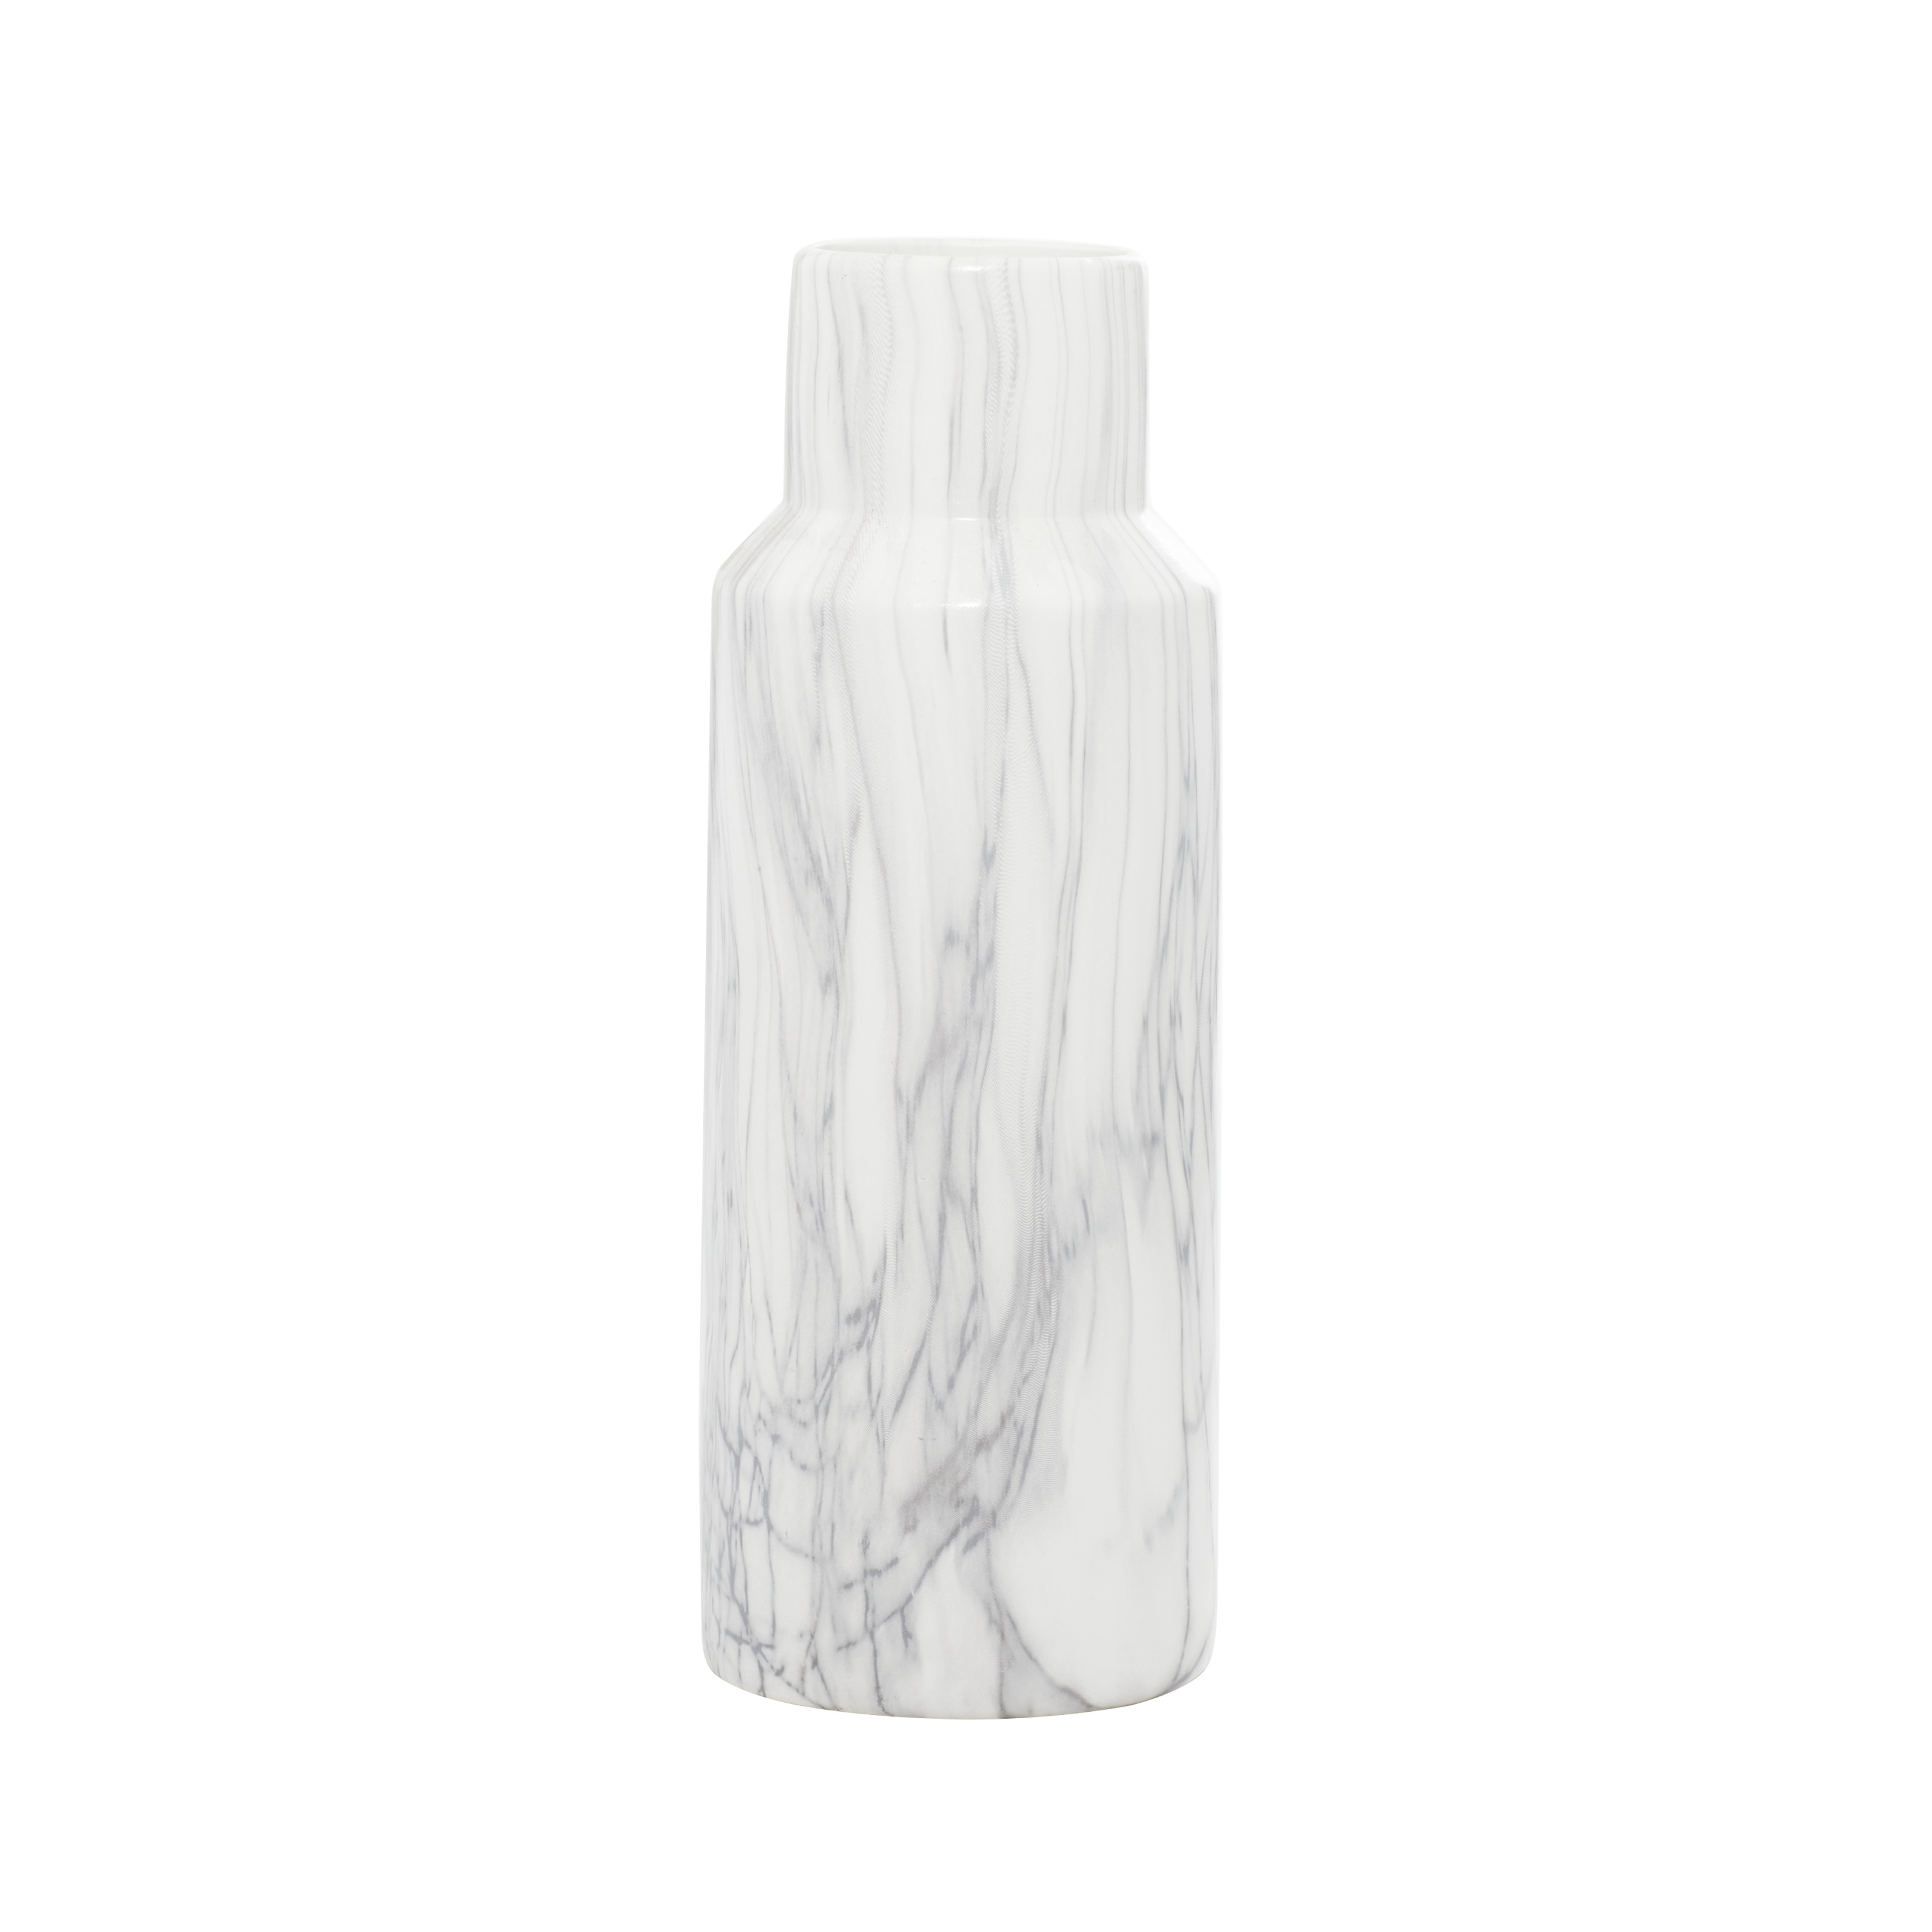 DecMode 15" Faux Marble White Ceramic Vase - image 1 of 6